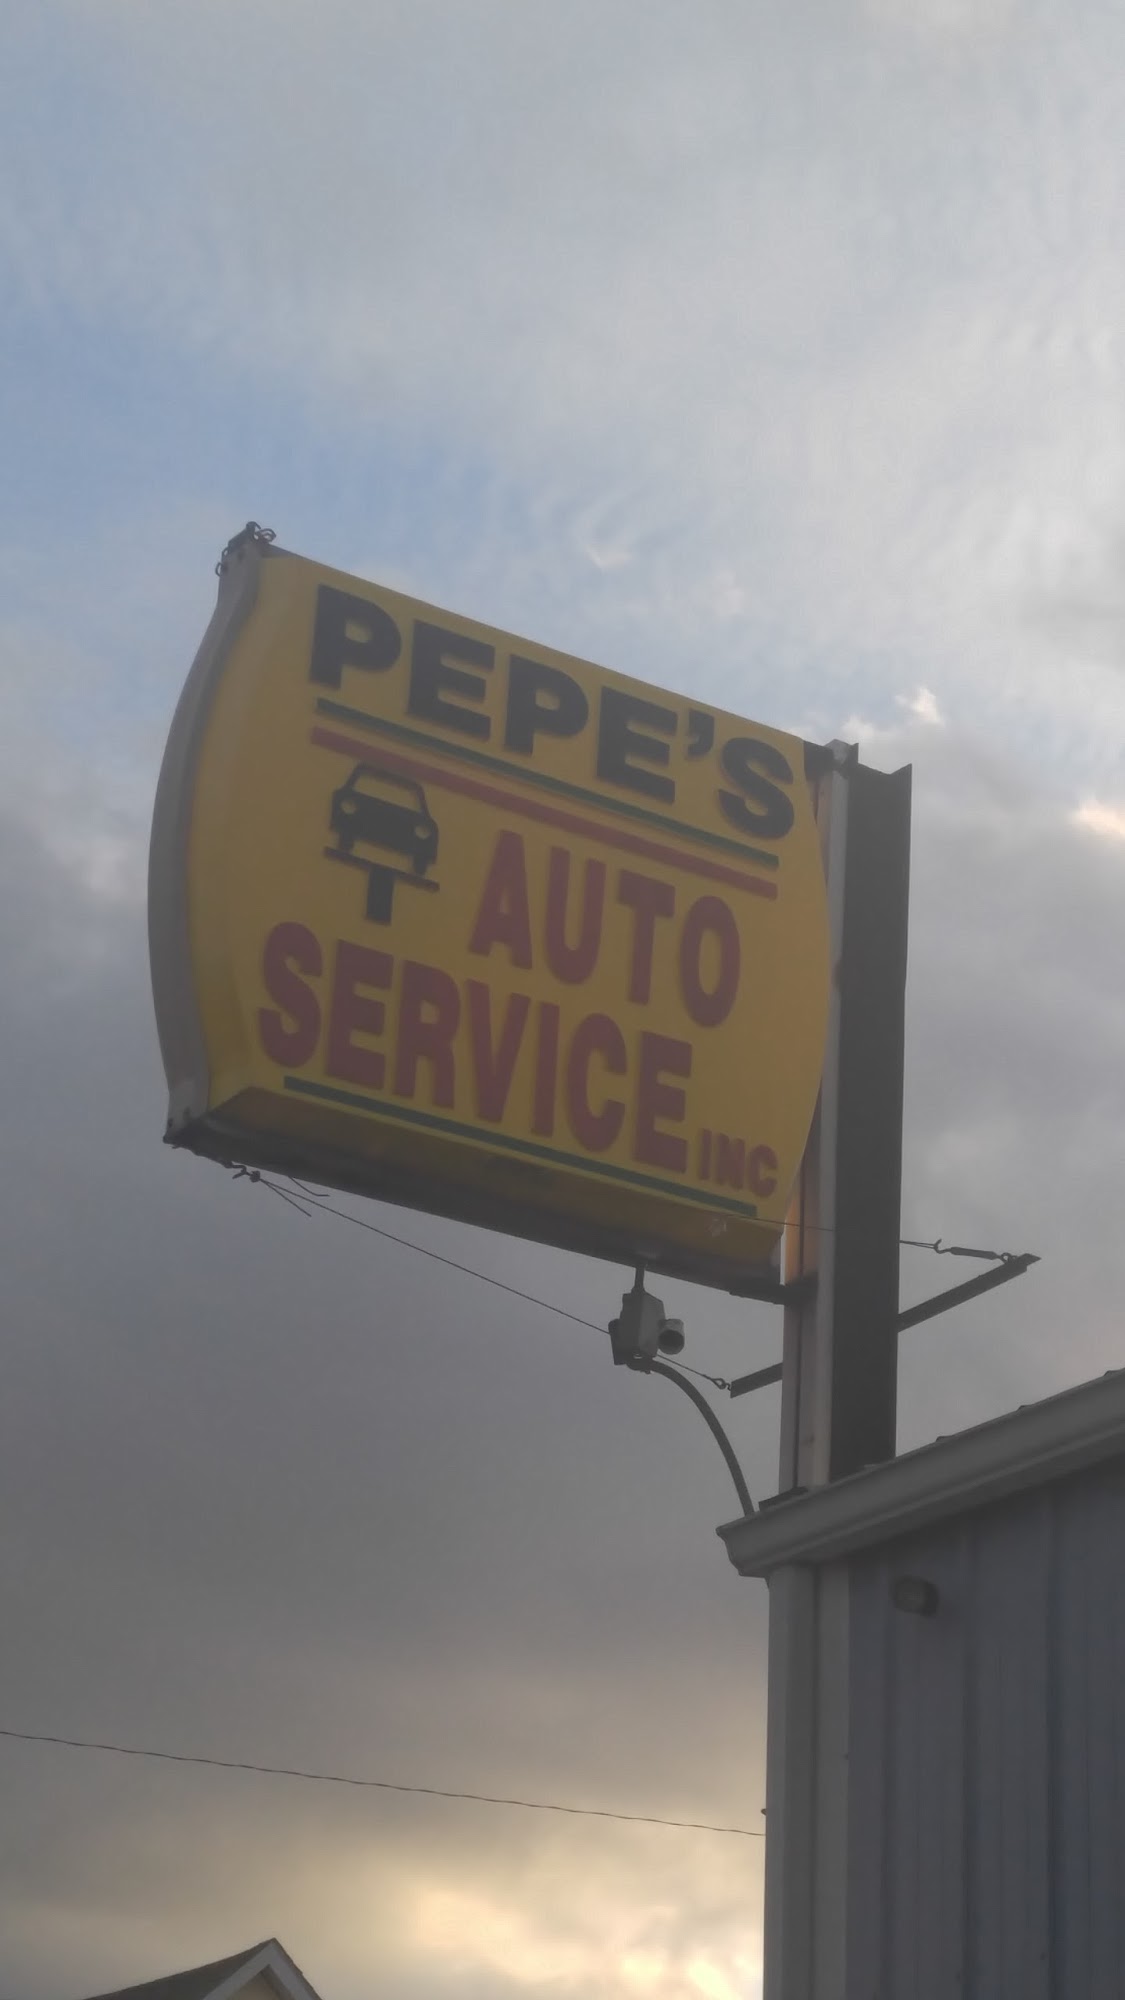 Pepe's Auto Services